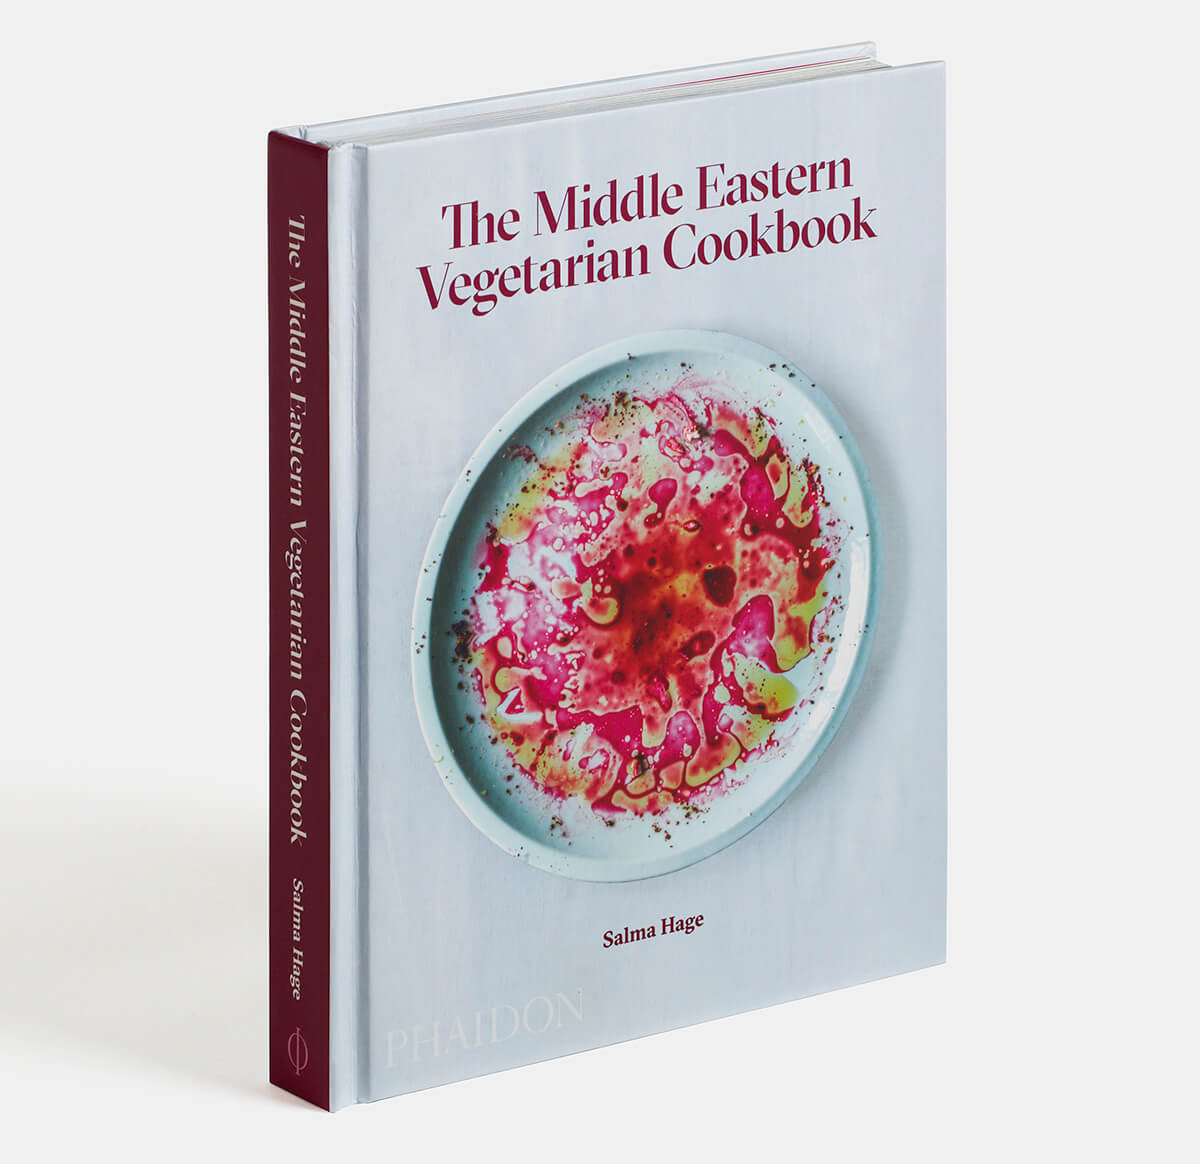 The Middle Eastern Vegetarian Cookbook